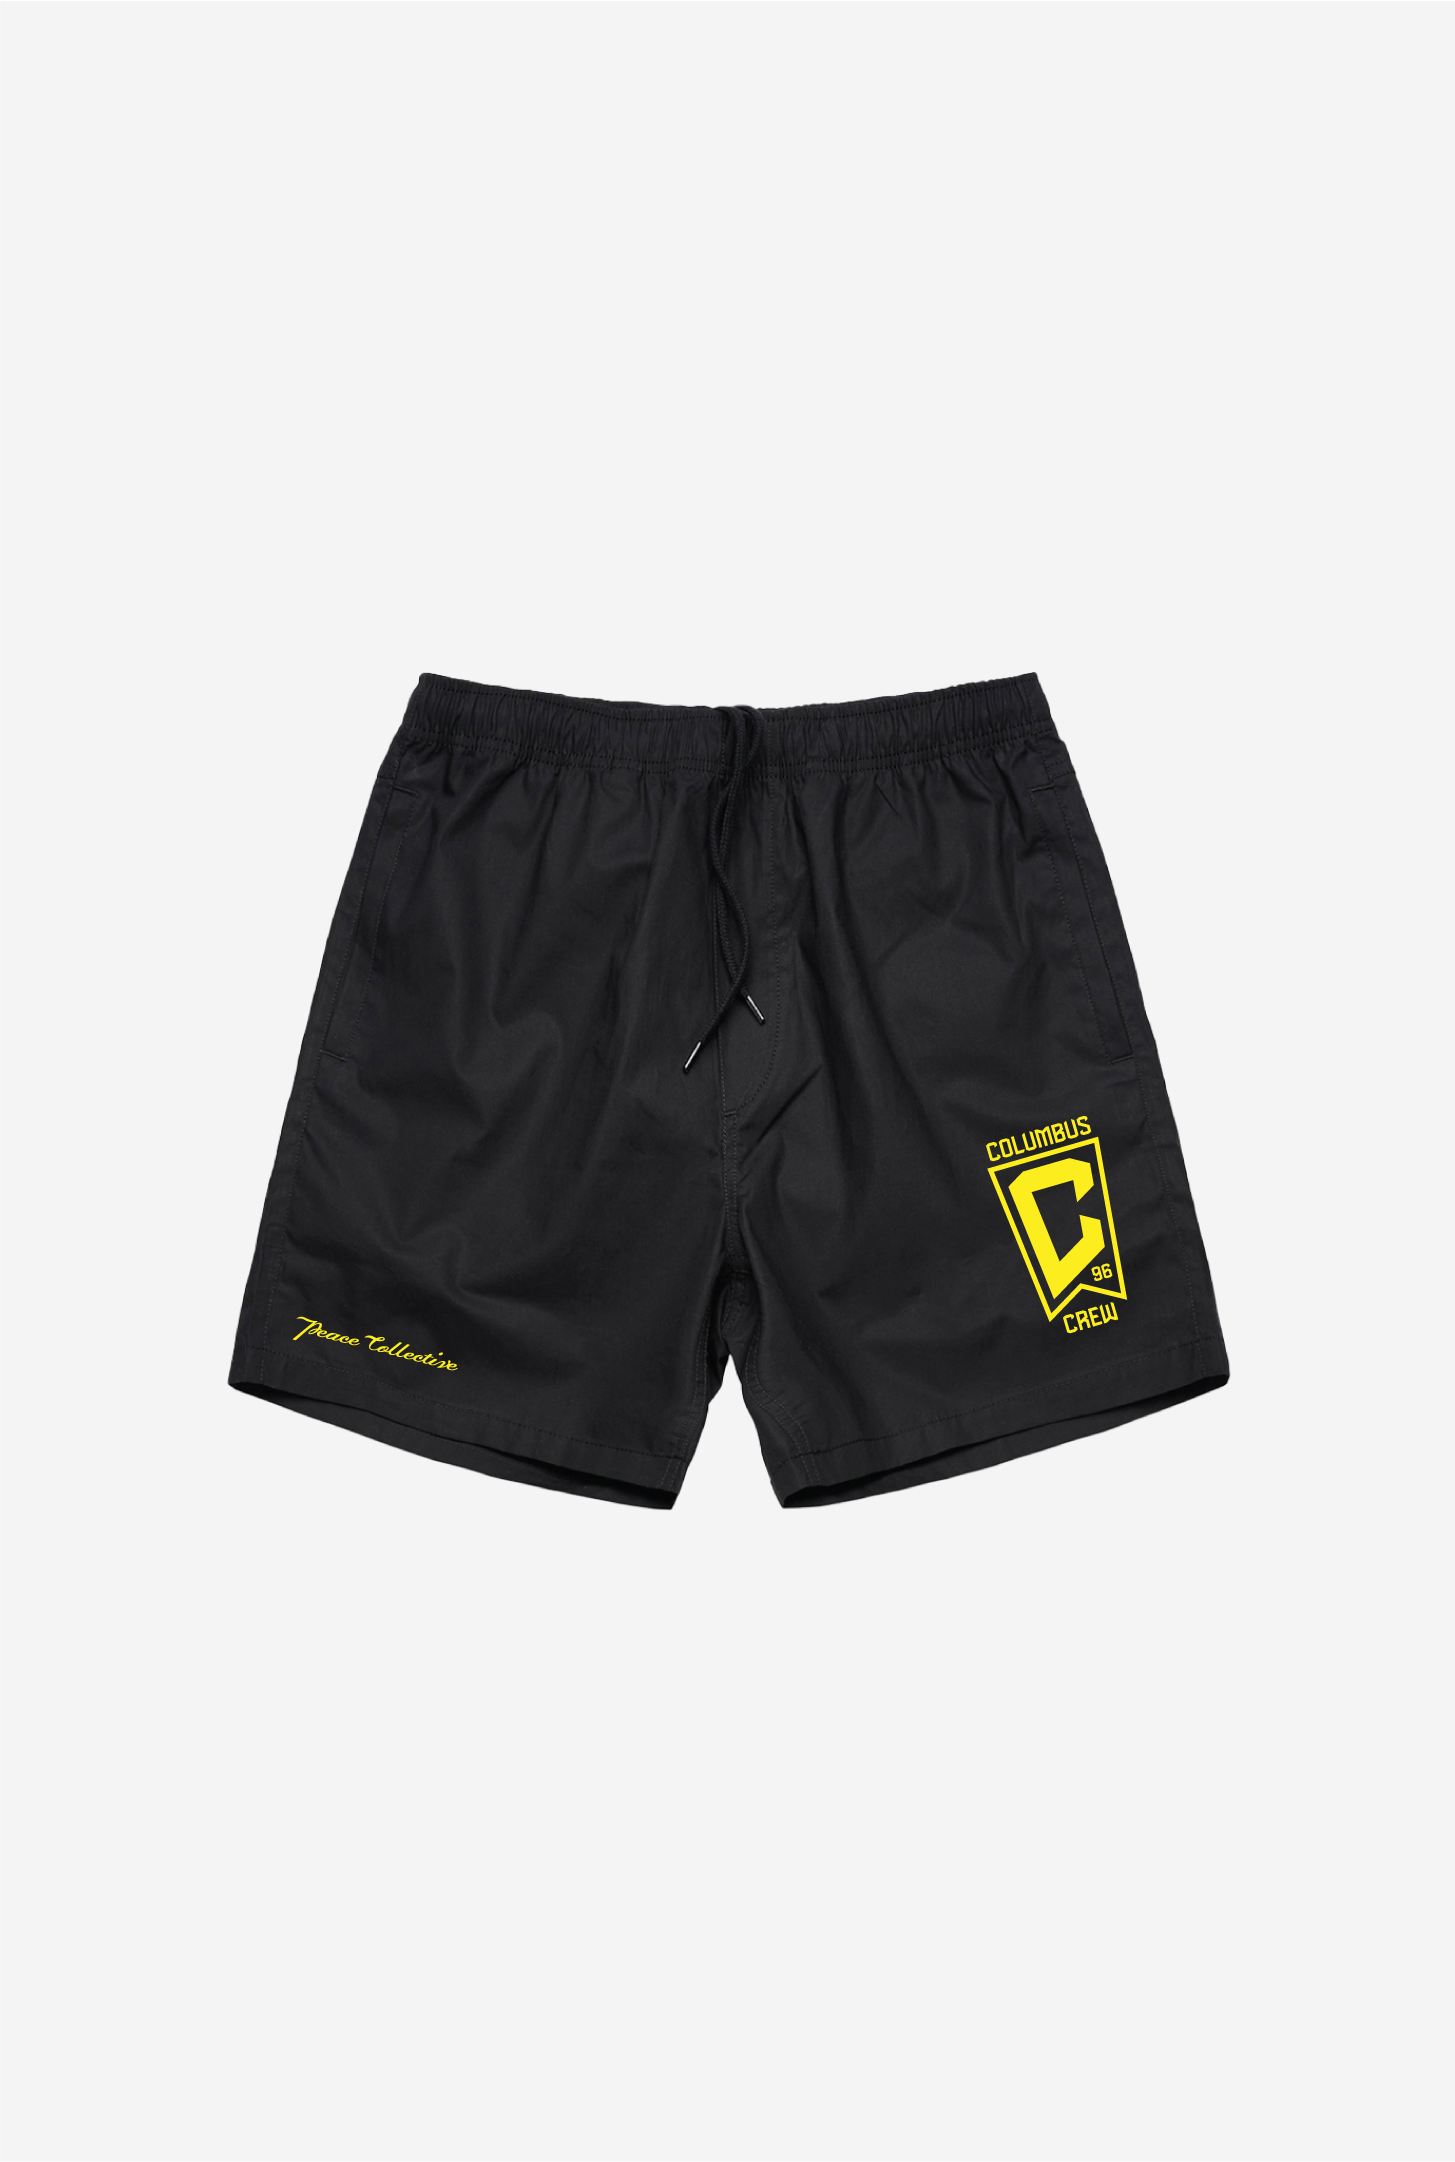 Columbus Crew Board Shorts - Black